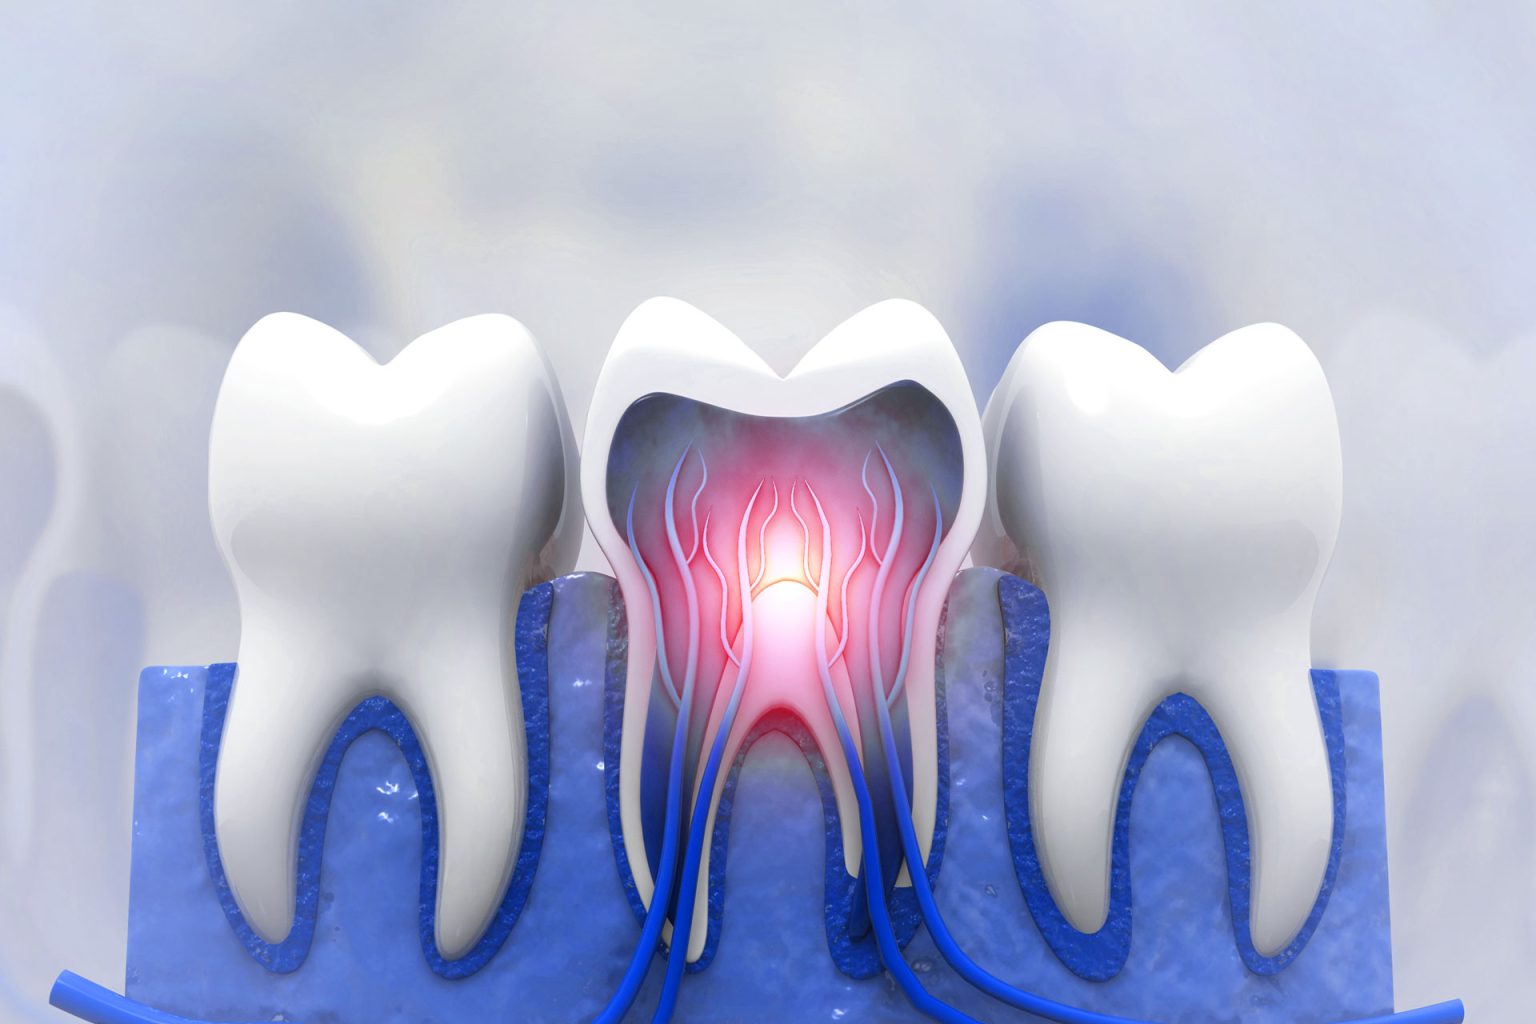 dolore nervo denti dentista bologna centro smm 1536x1024 1